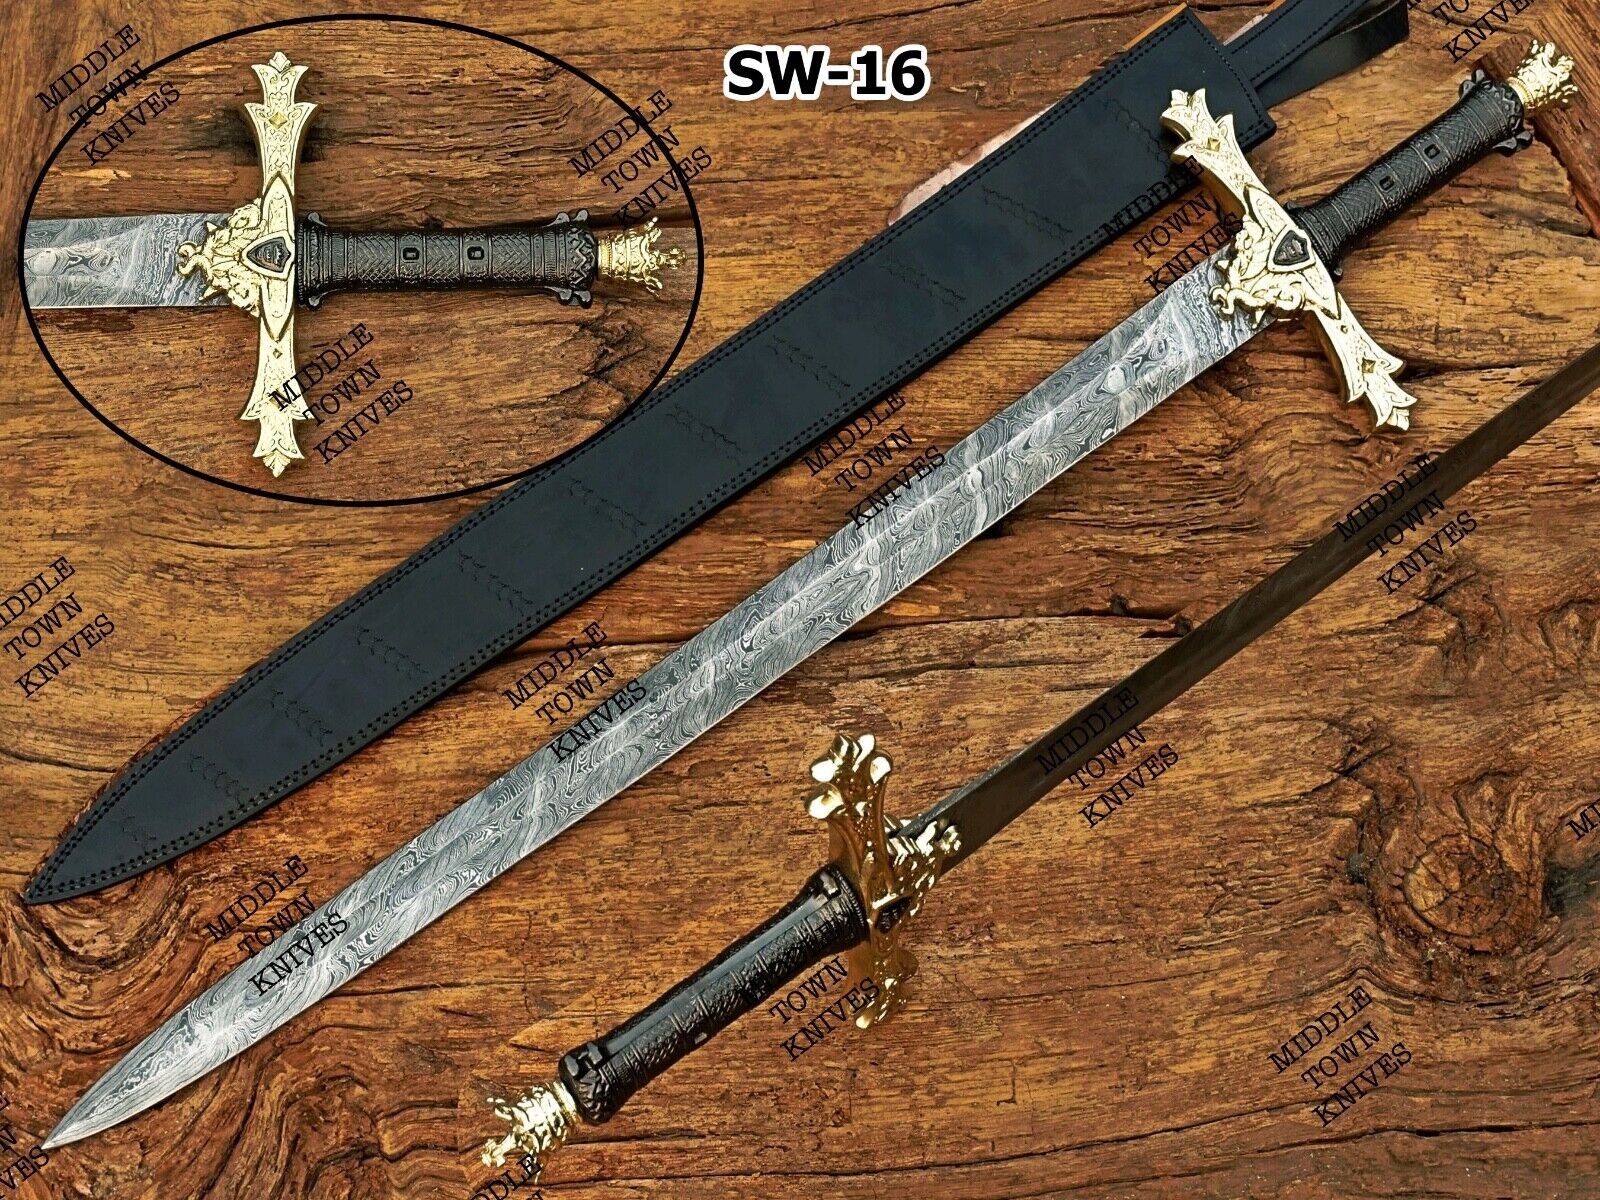 Damascus Steel King Arthur Sword | Excalibur Sword Crown Edition.